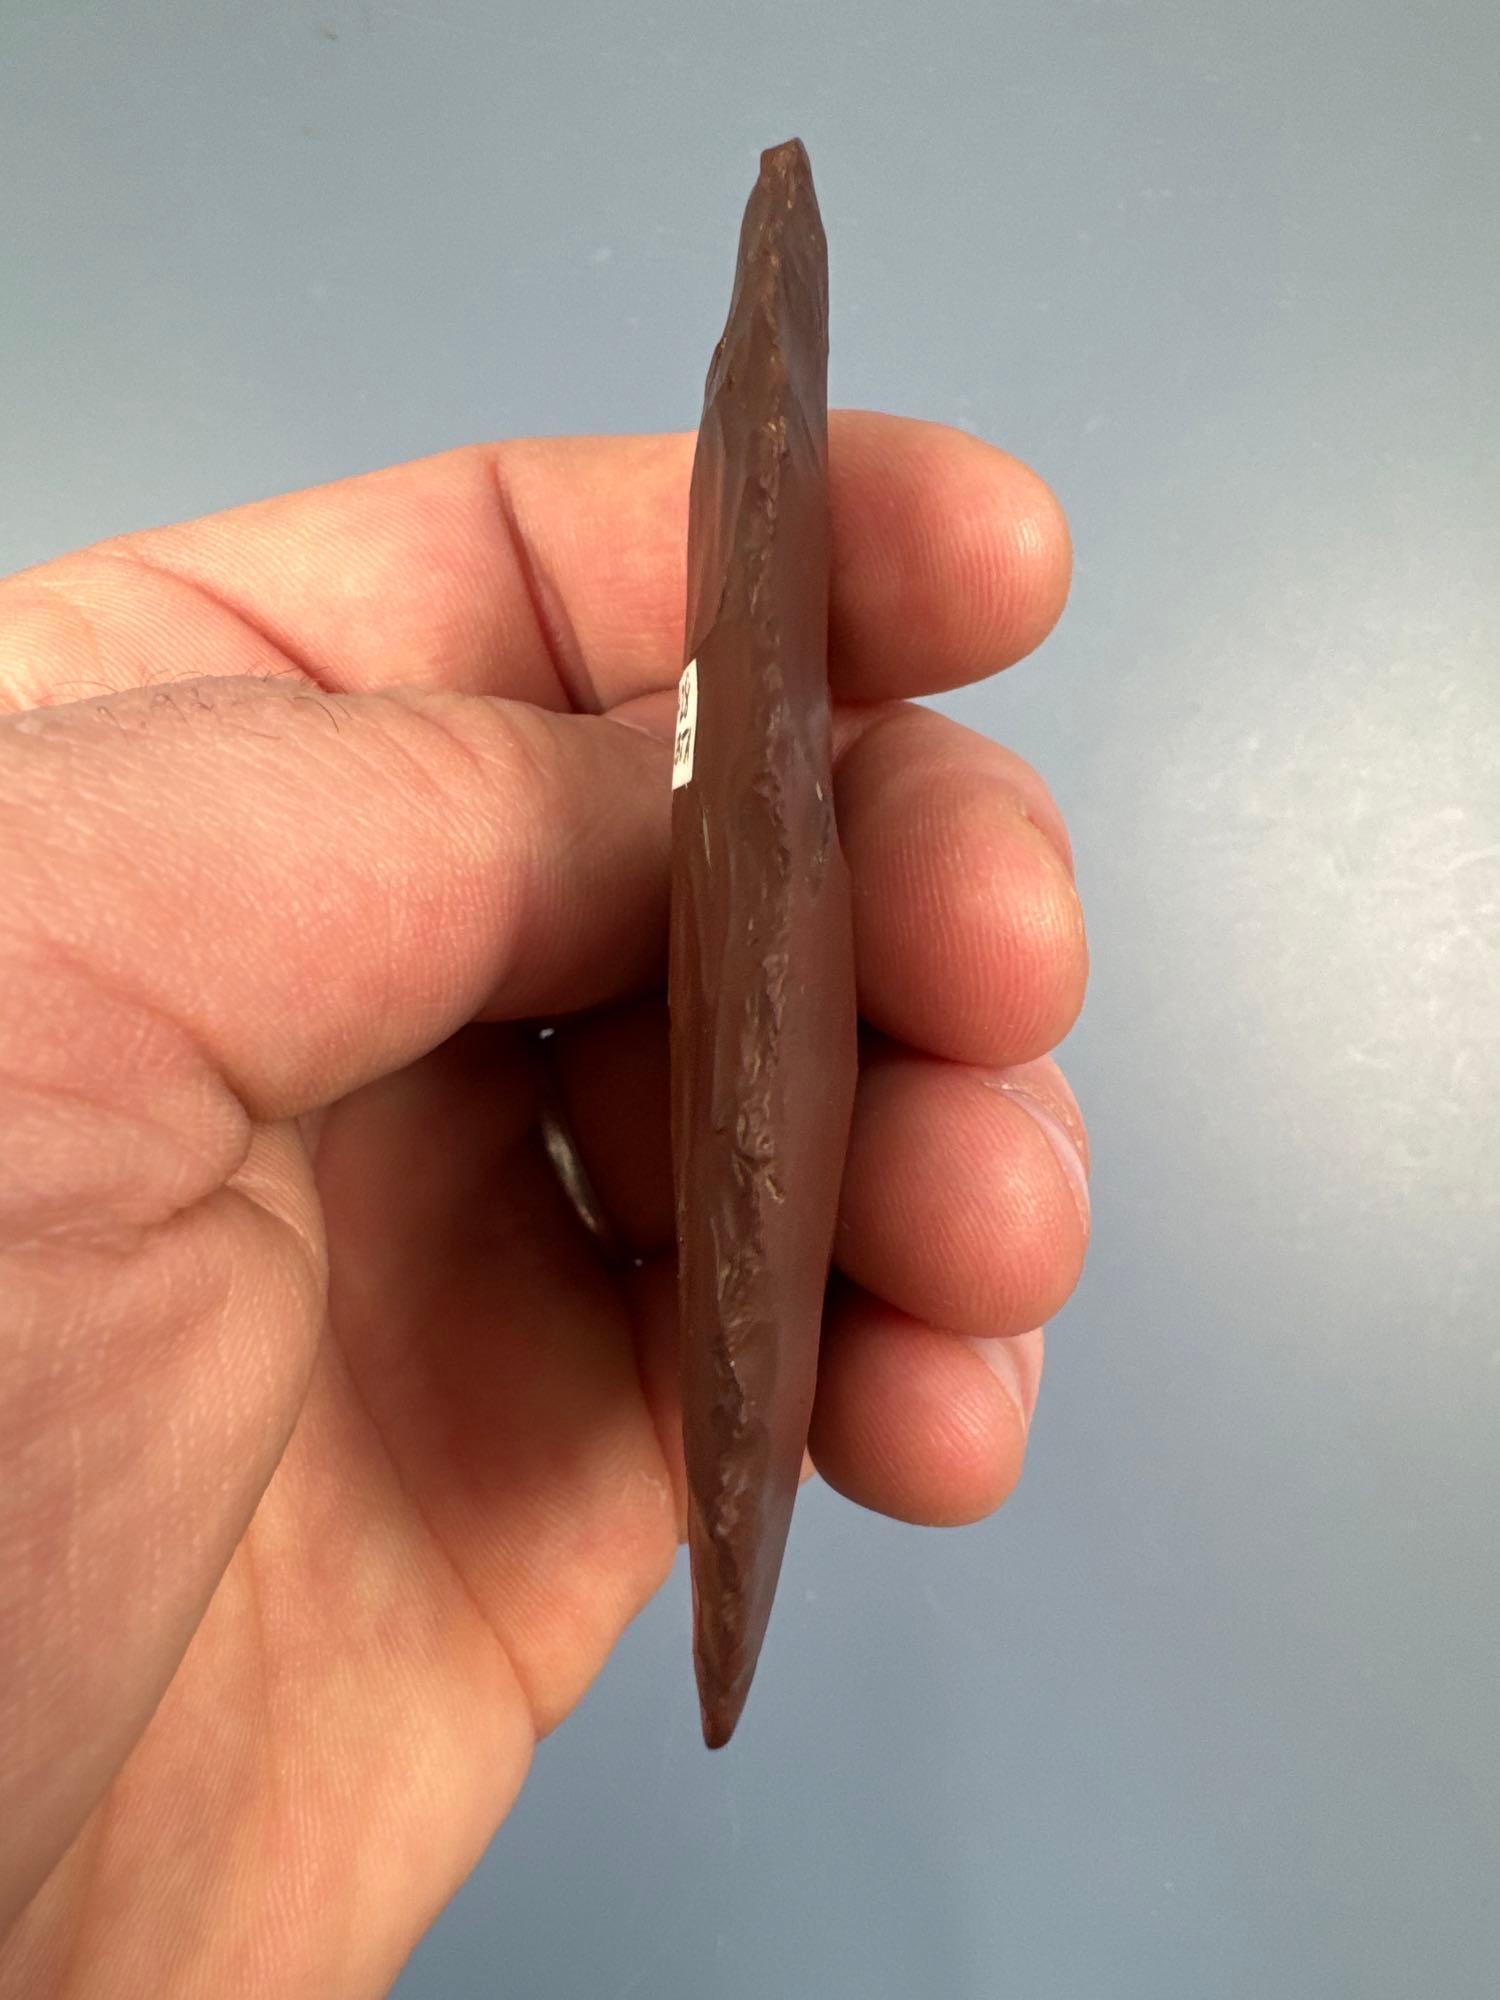 NICE 3 5/16" Munsungun Chert (Red) Pentagonal Knife, Found in Montgomery Co., PA, Ex: Amspacher